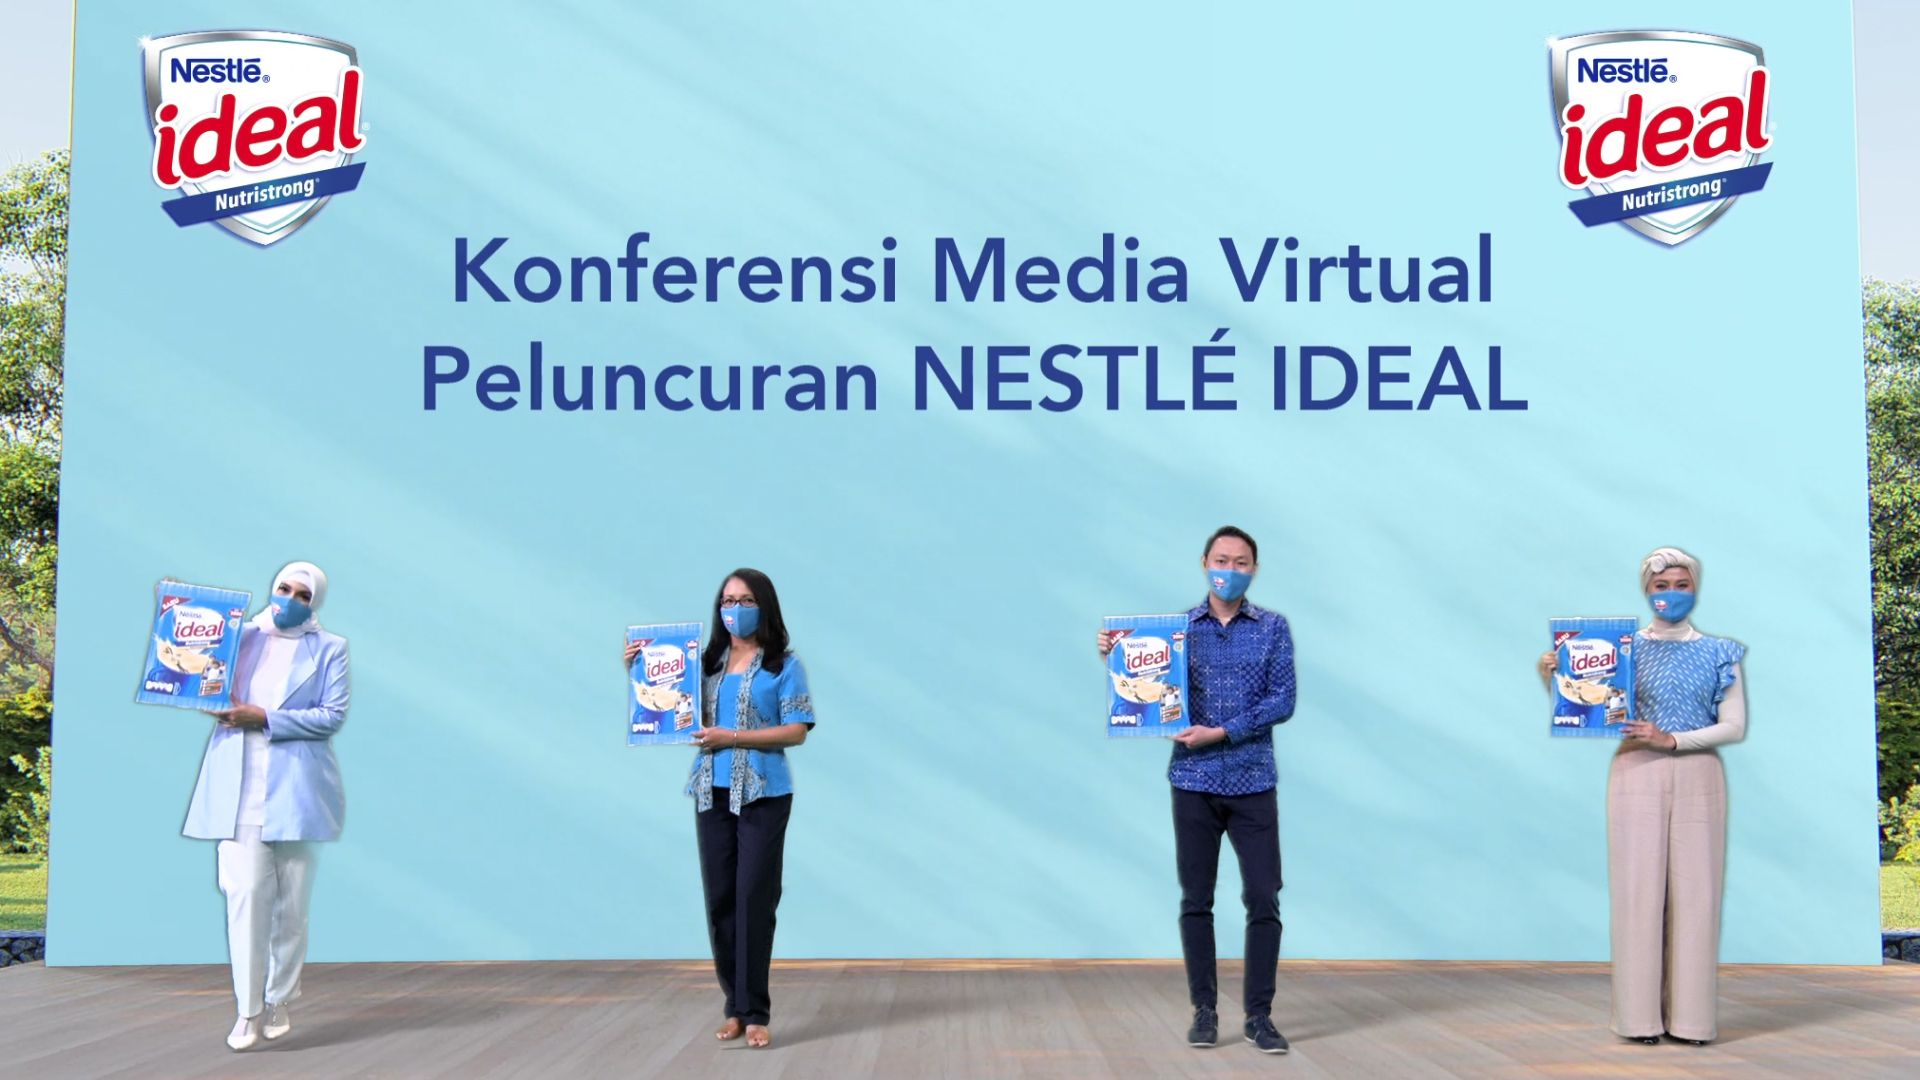 Konferensi media virtual peluncuran Nestle Ideal, Rabu 16 September 2020.